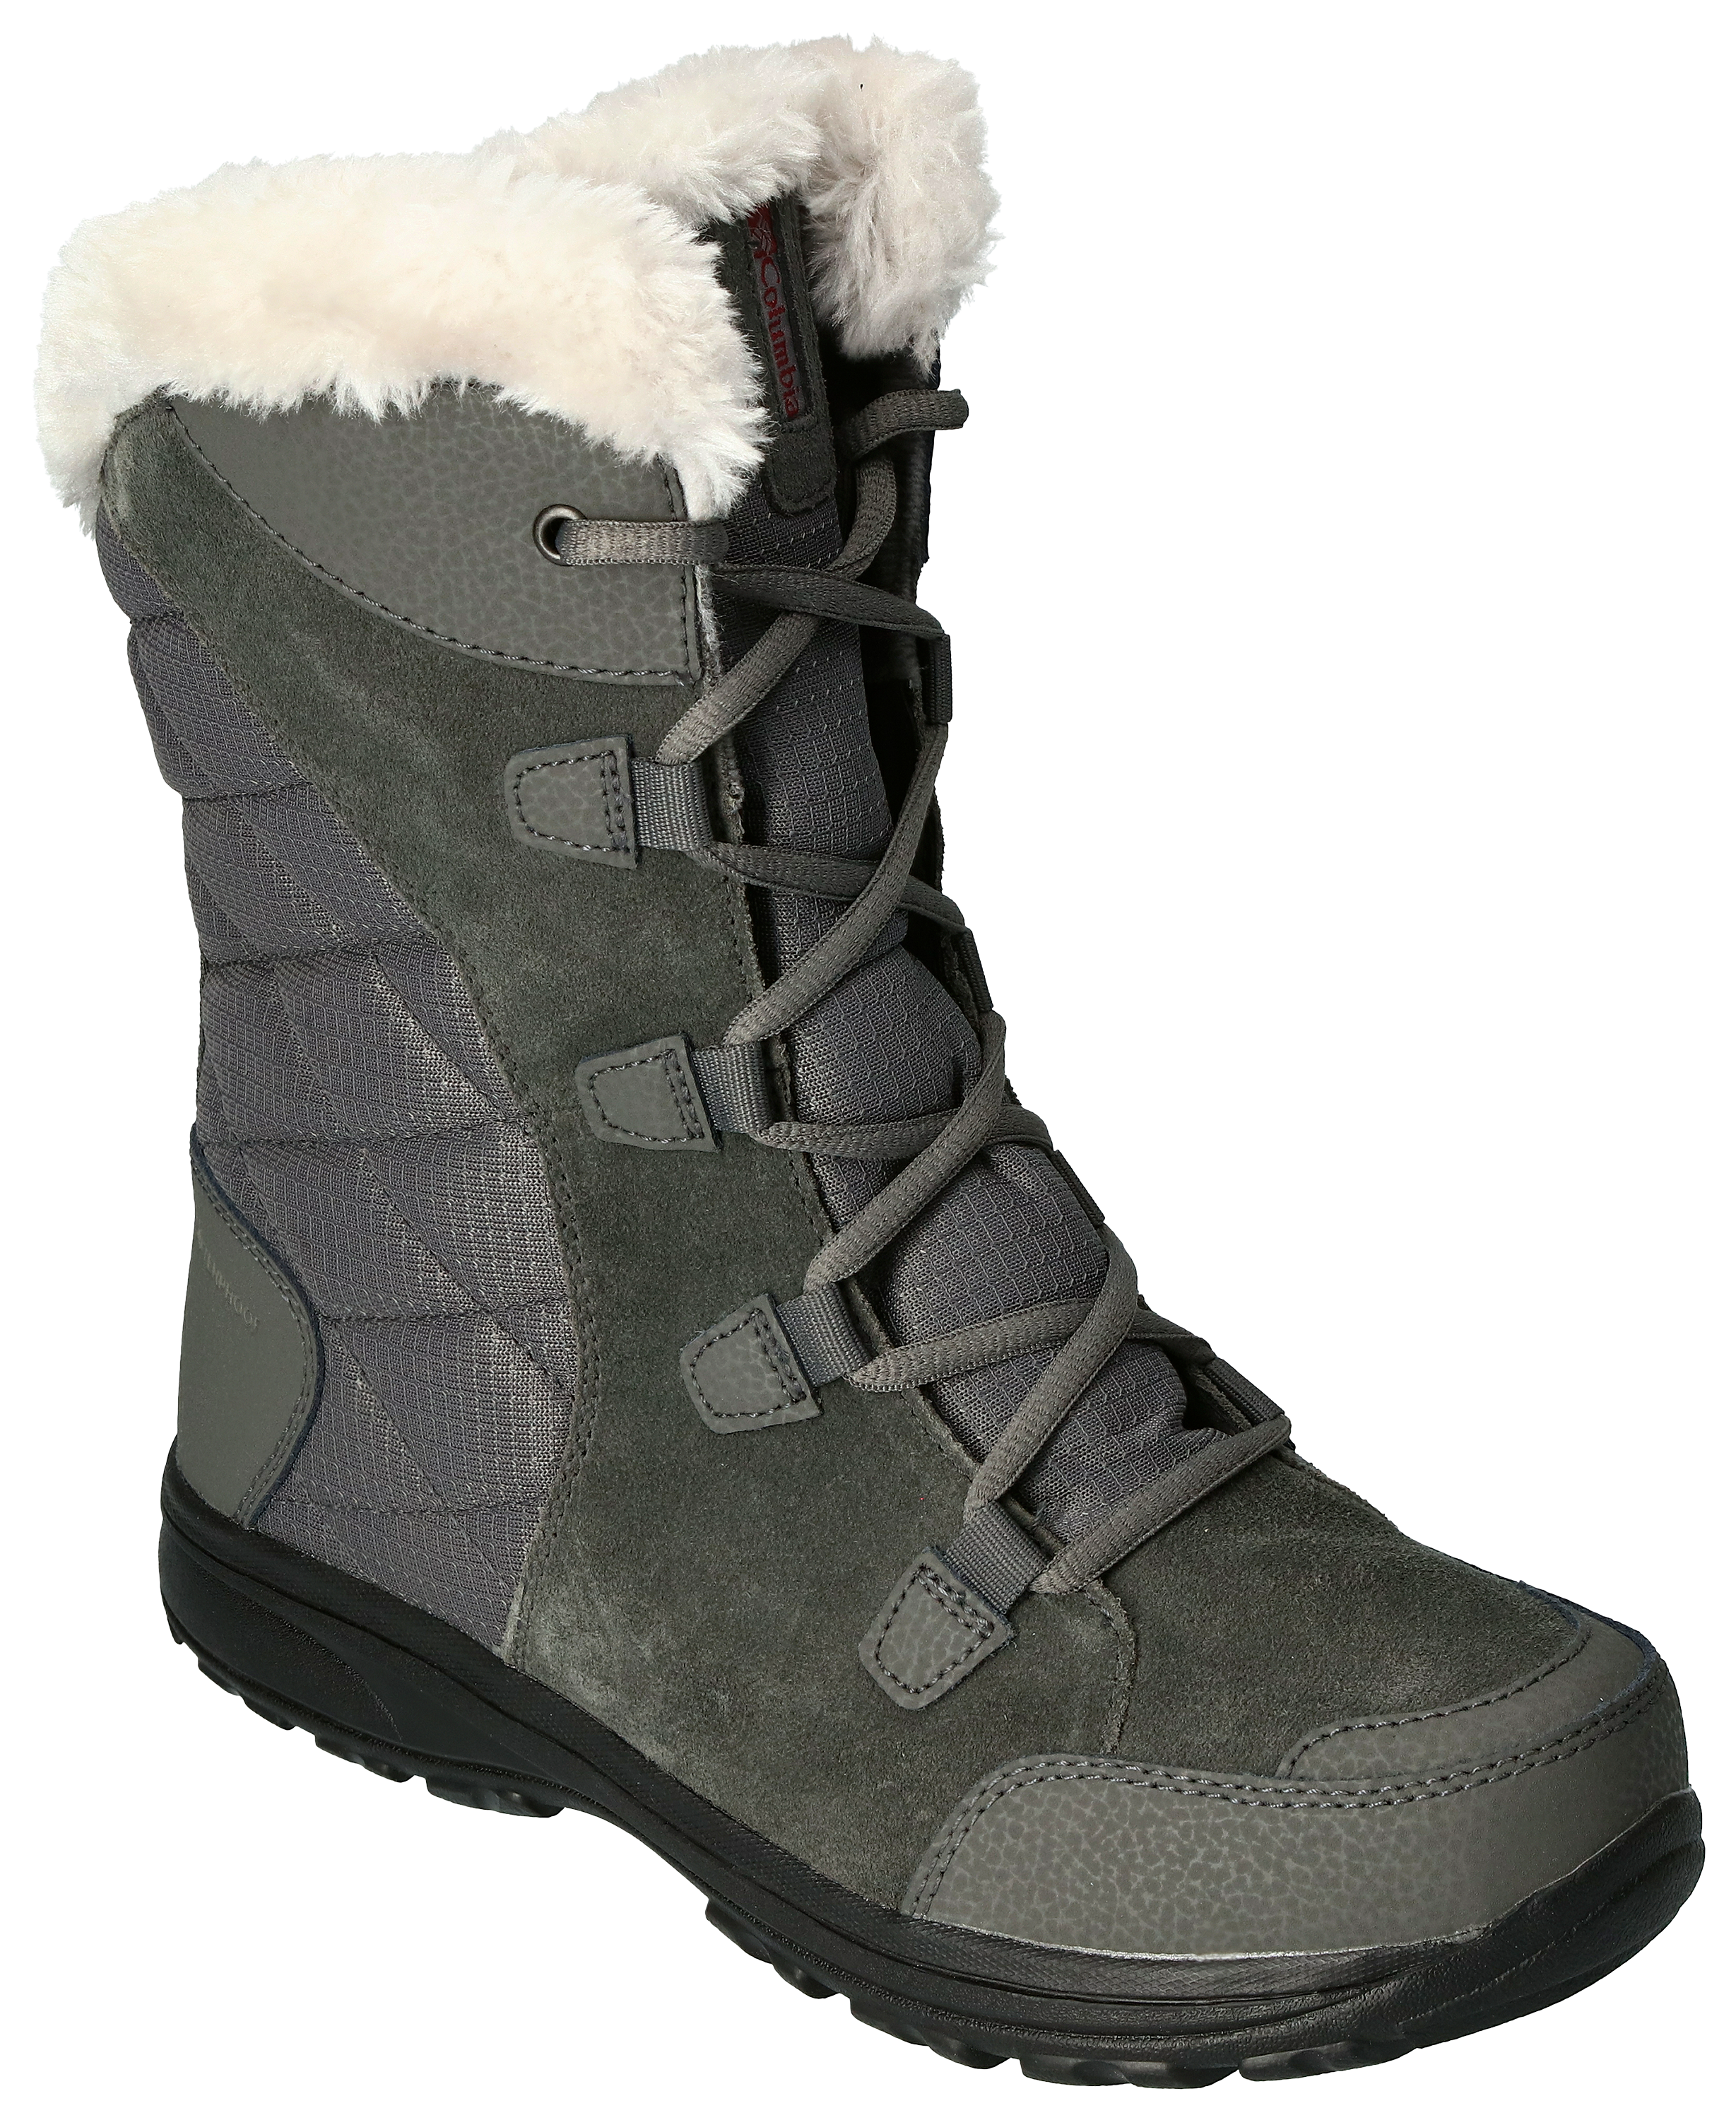 Columbia Ice Maiden II Waterproof Insulated Winter Boots for Ladies